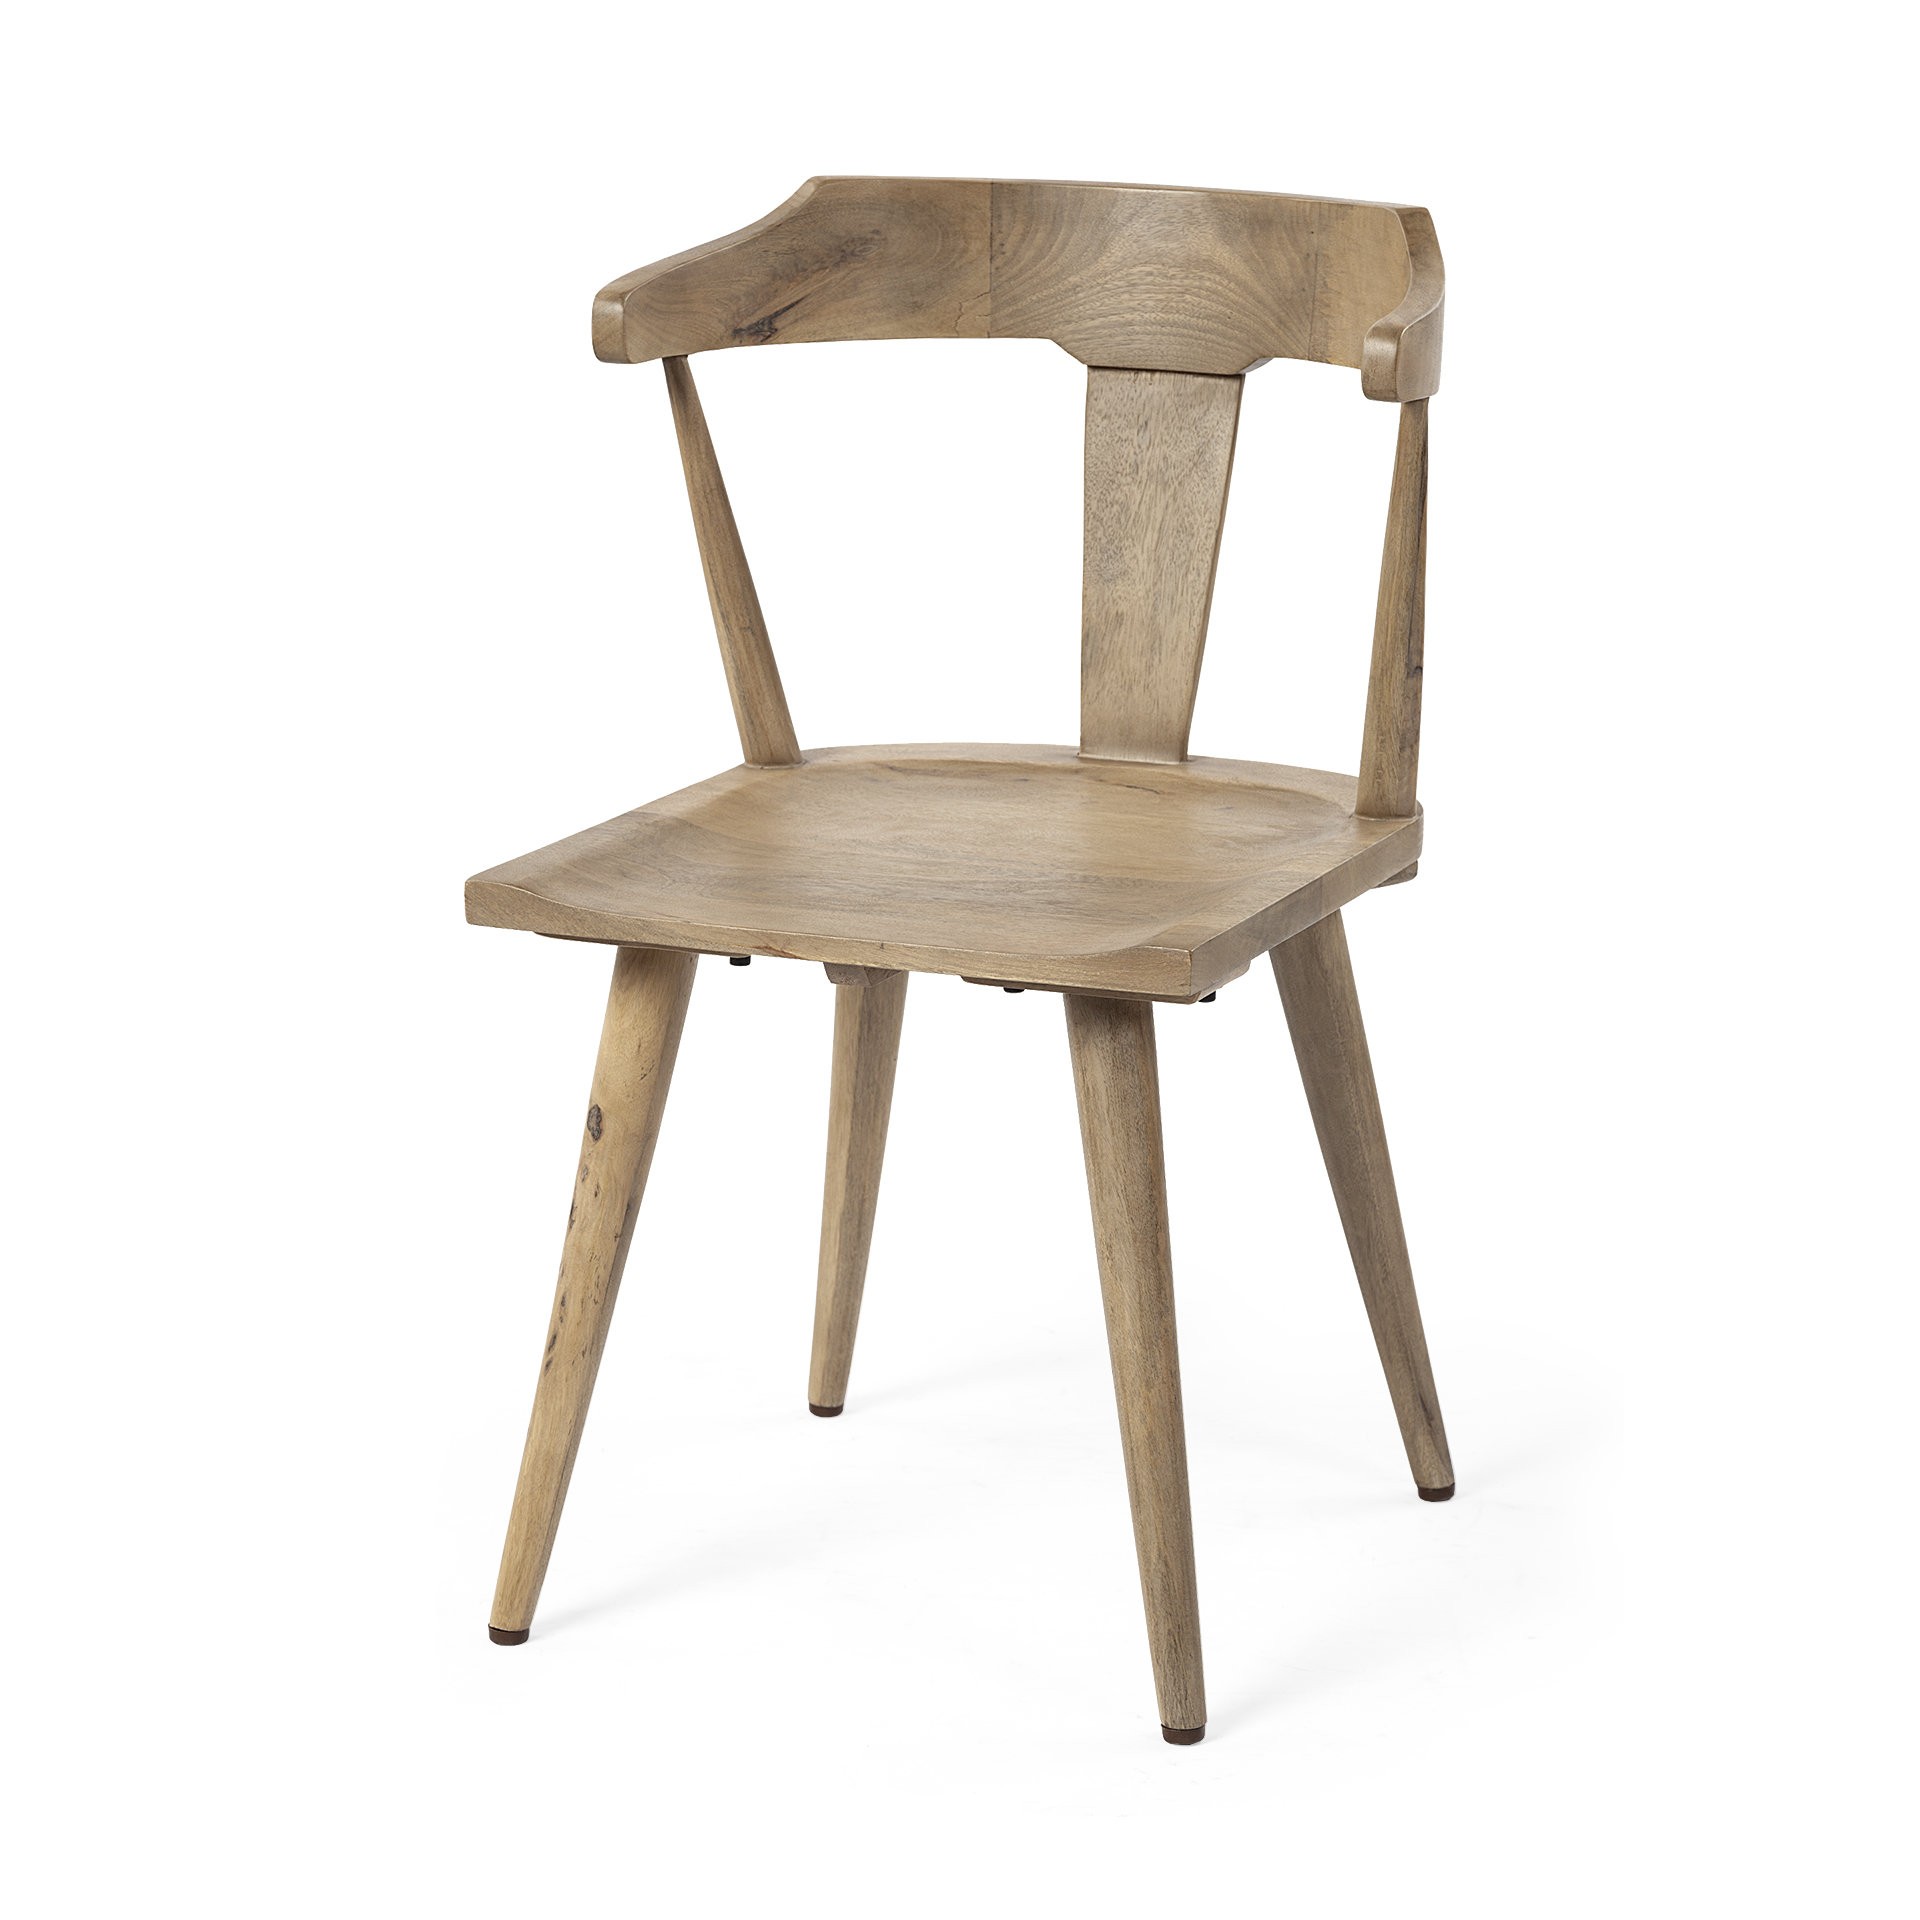 Light Brown Mid Century Sleek Wooden Dining Chair